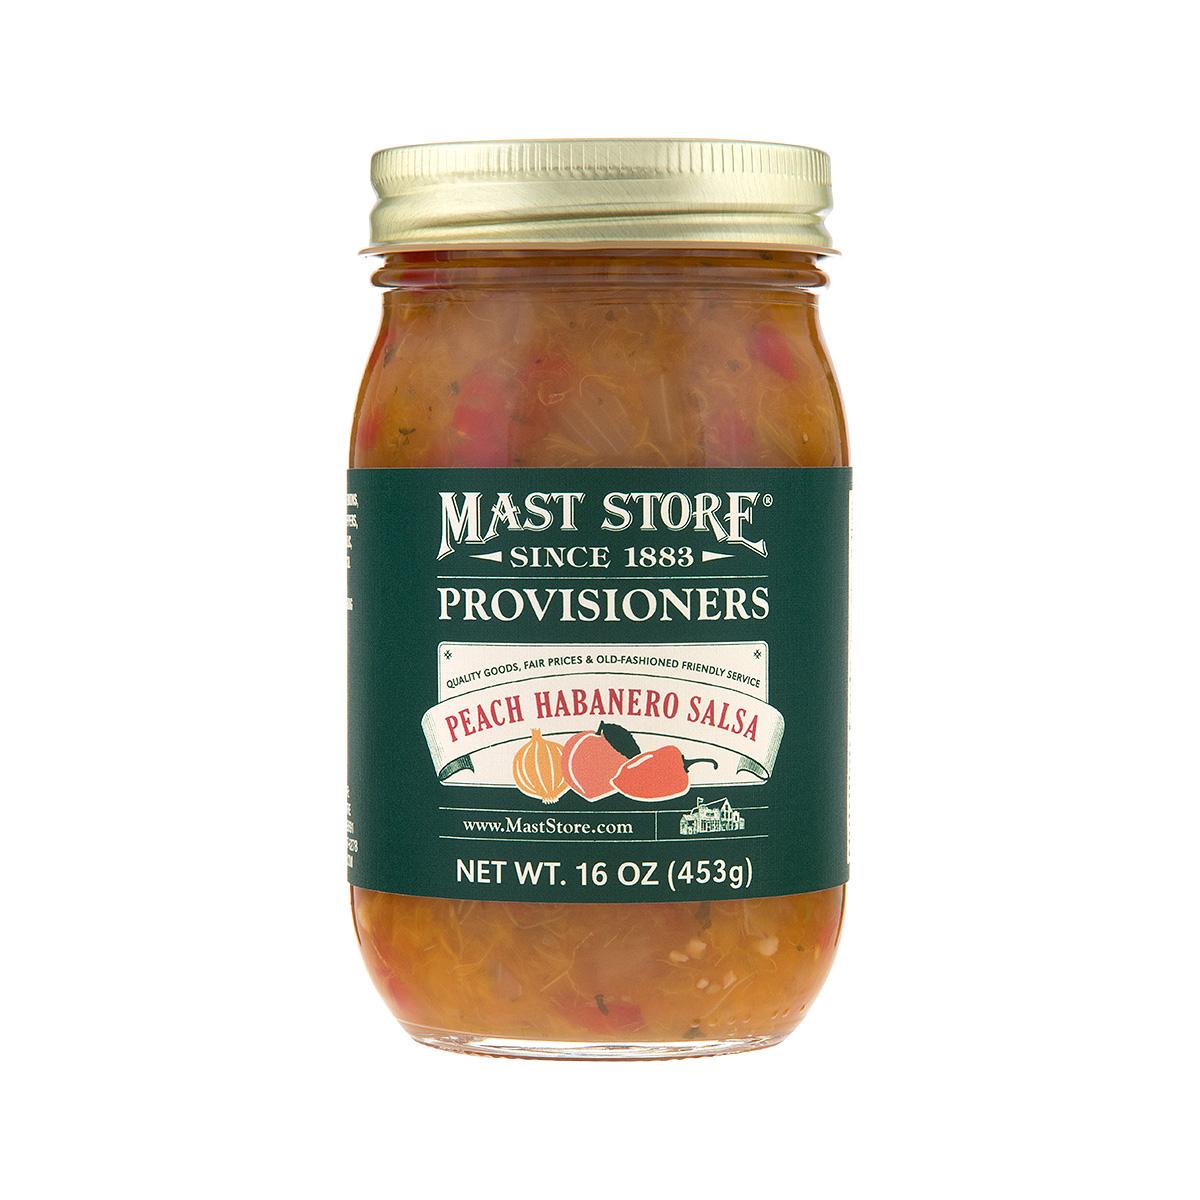  Mast Store Provisioners Peach Habanero Salsa